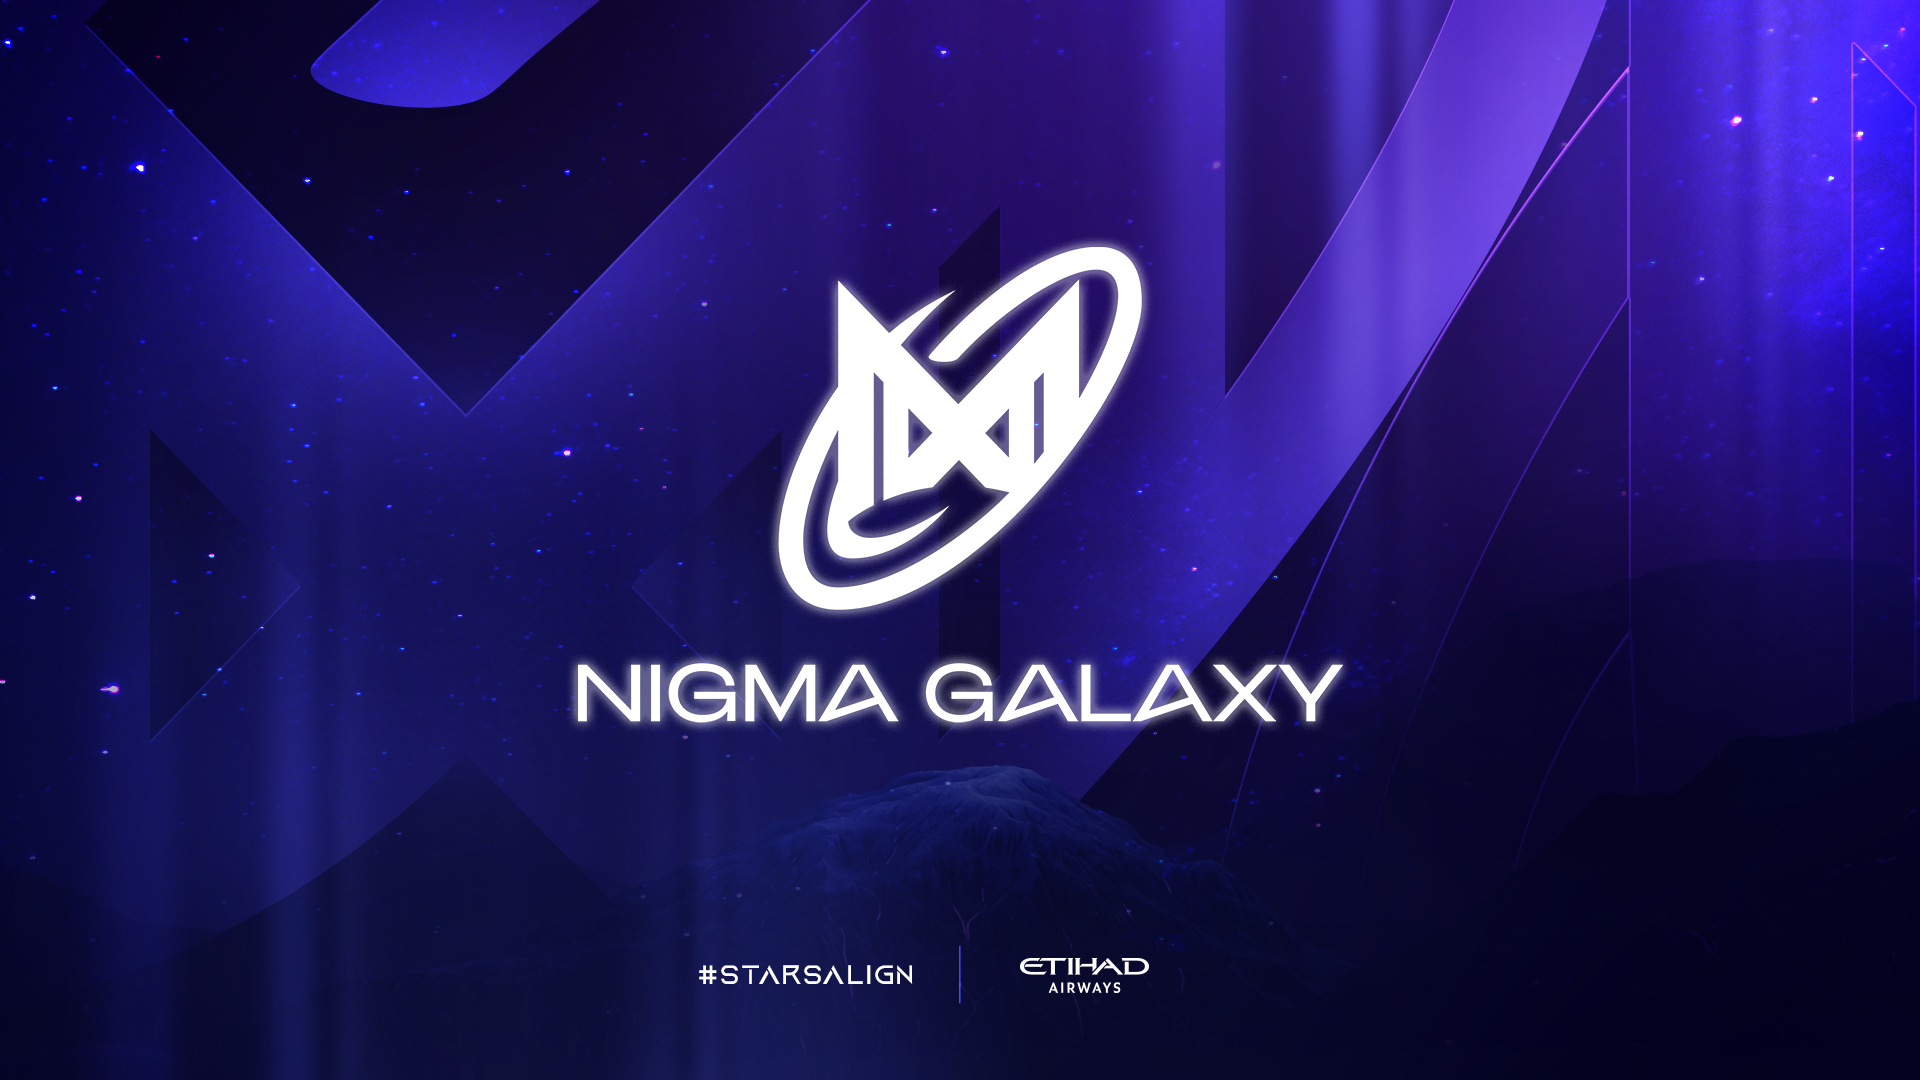 Galaxy Racer, Team Nigma announce merger